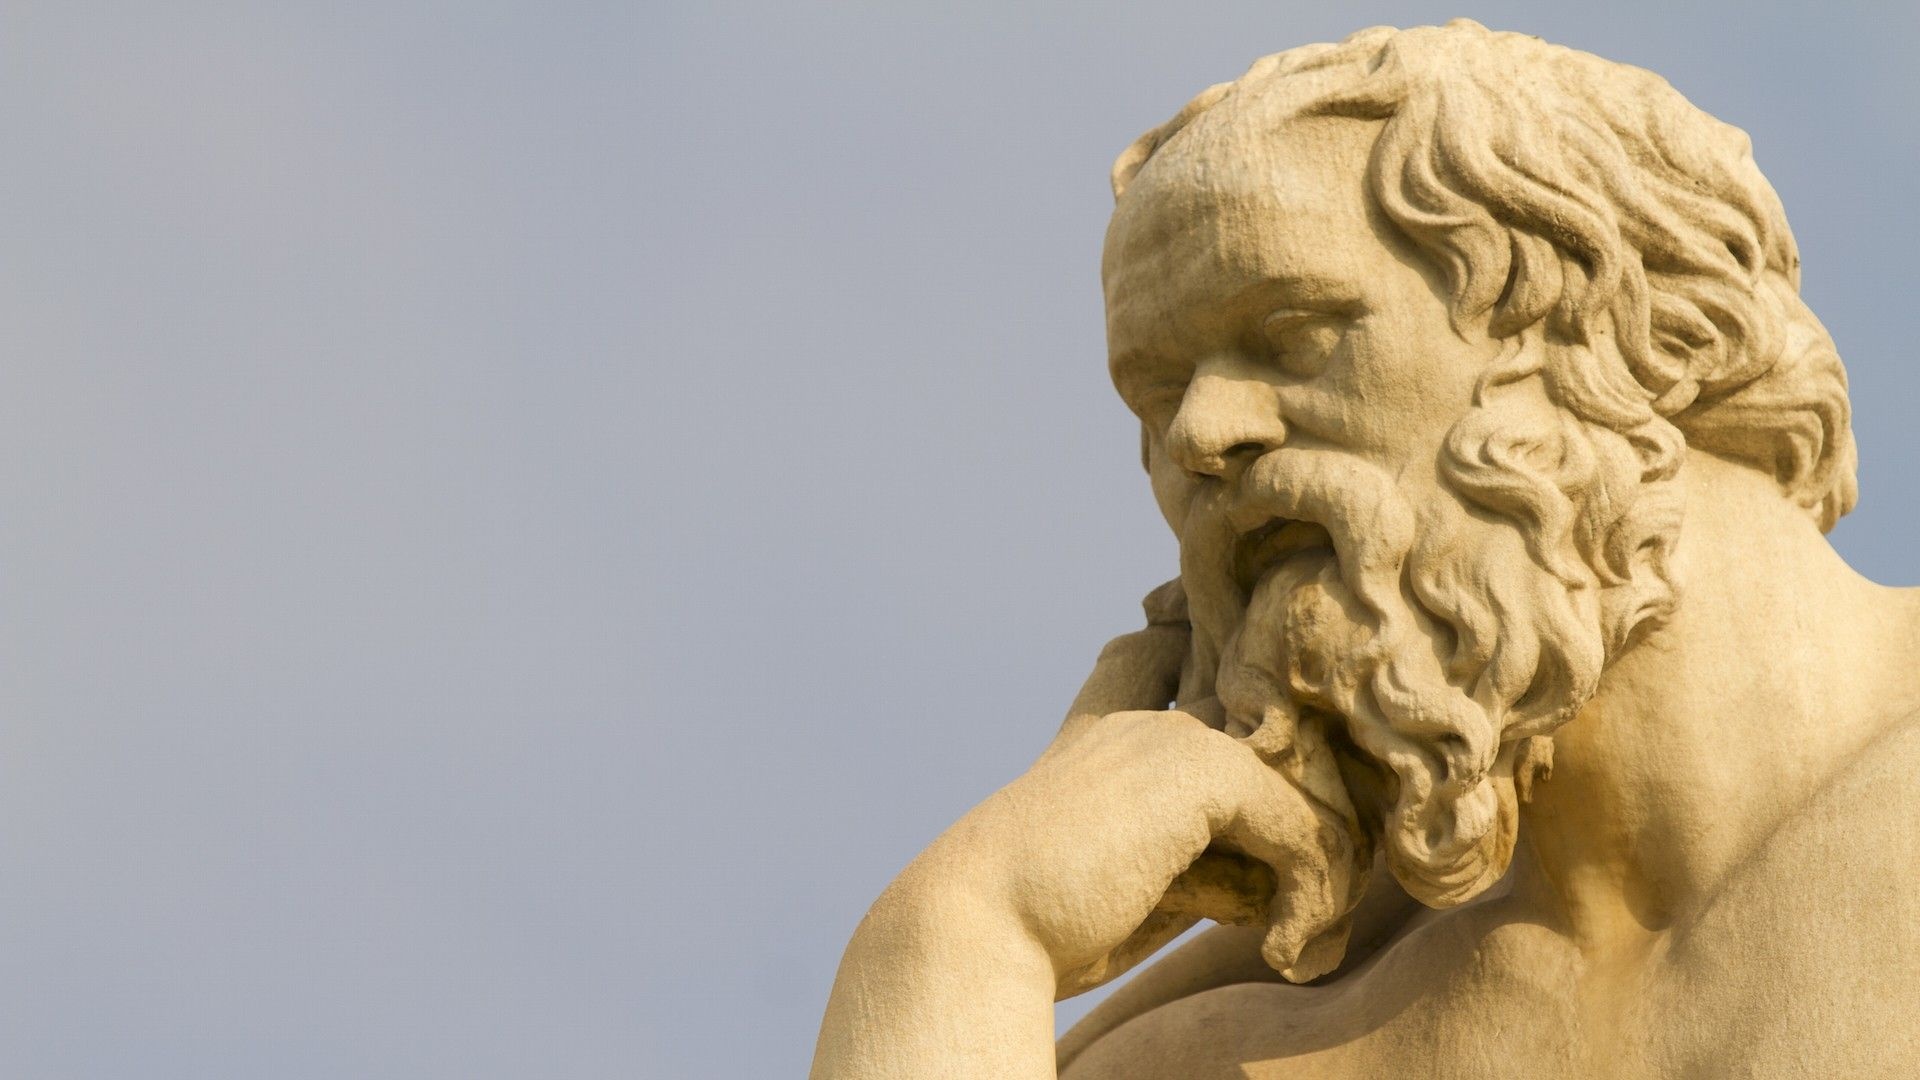 Plato, Greek philosophers, Top free wallpapers, 1920x1080 Full HD Desktop